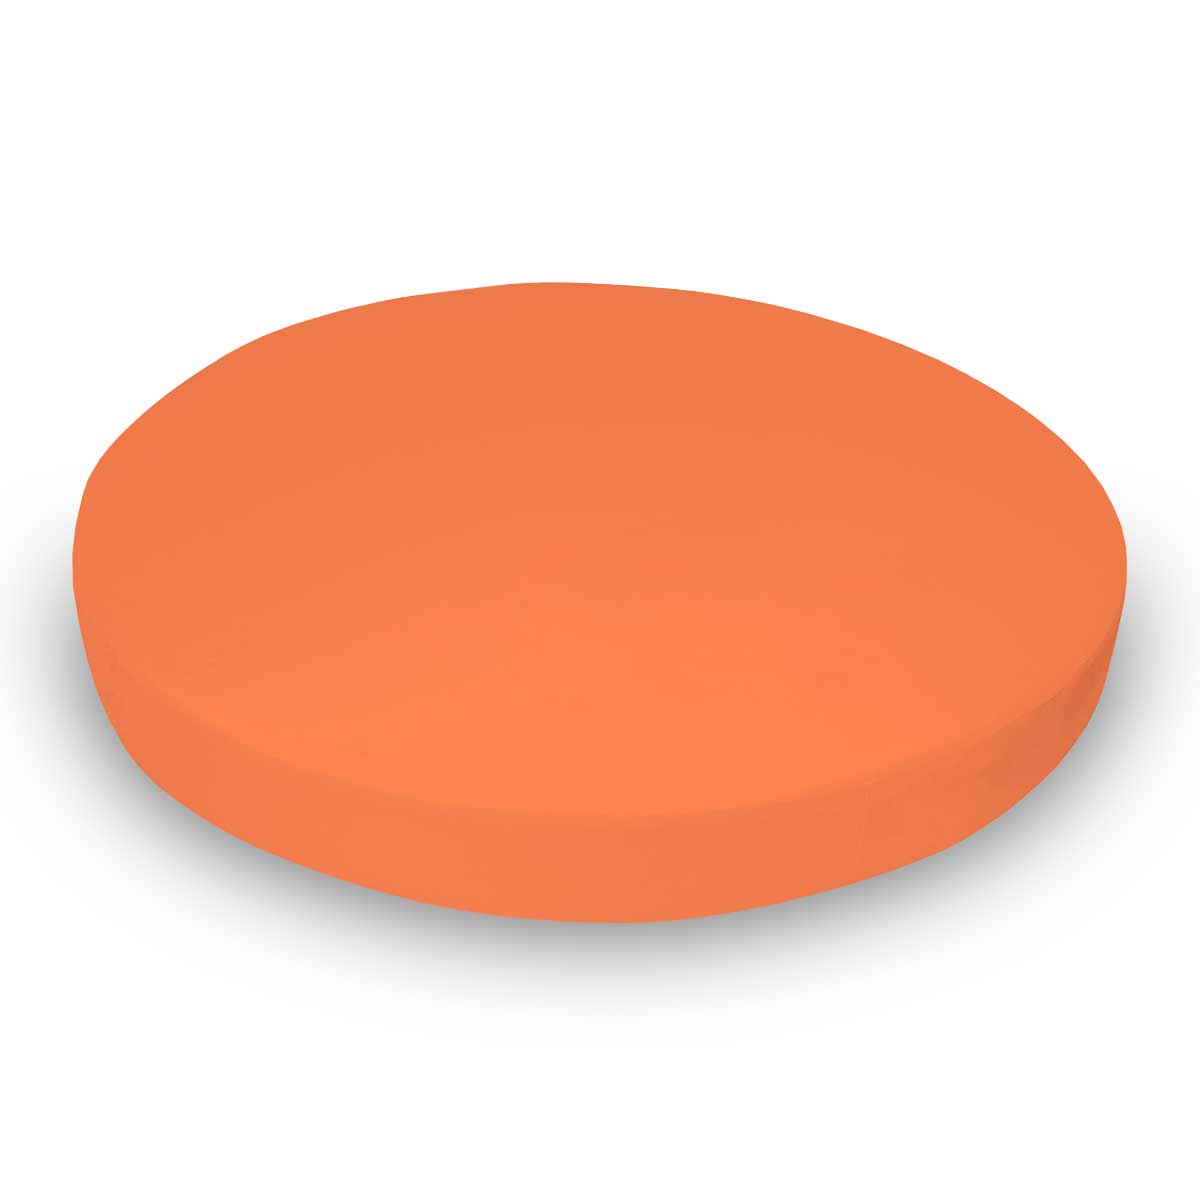 Oval (Stokke Mini) - Burnt Orange Jersey Knit - Fitted  Oval